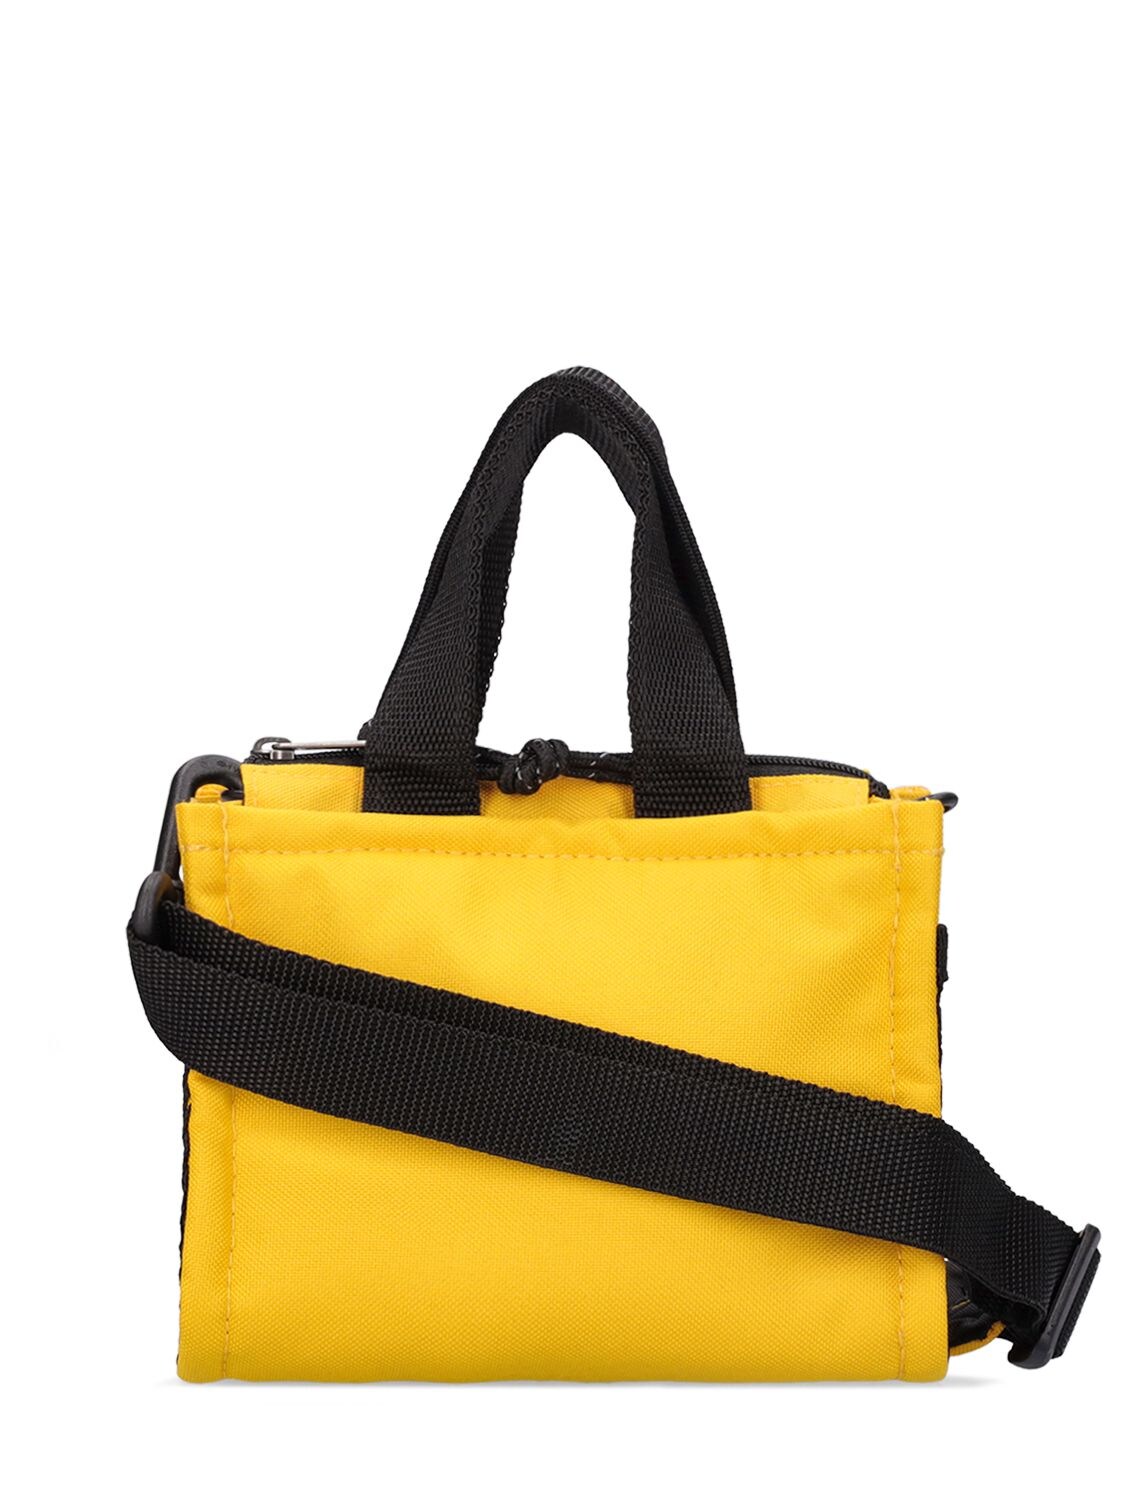 Telfar Mustard NWT Small Shopping Bag & XS/S (24-36 Inches) Belt NIB